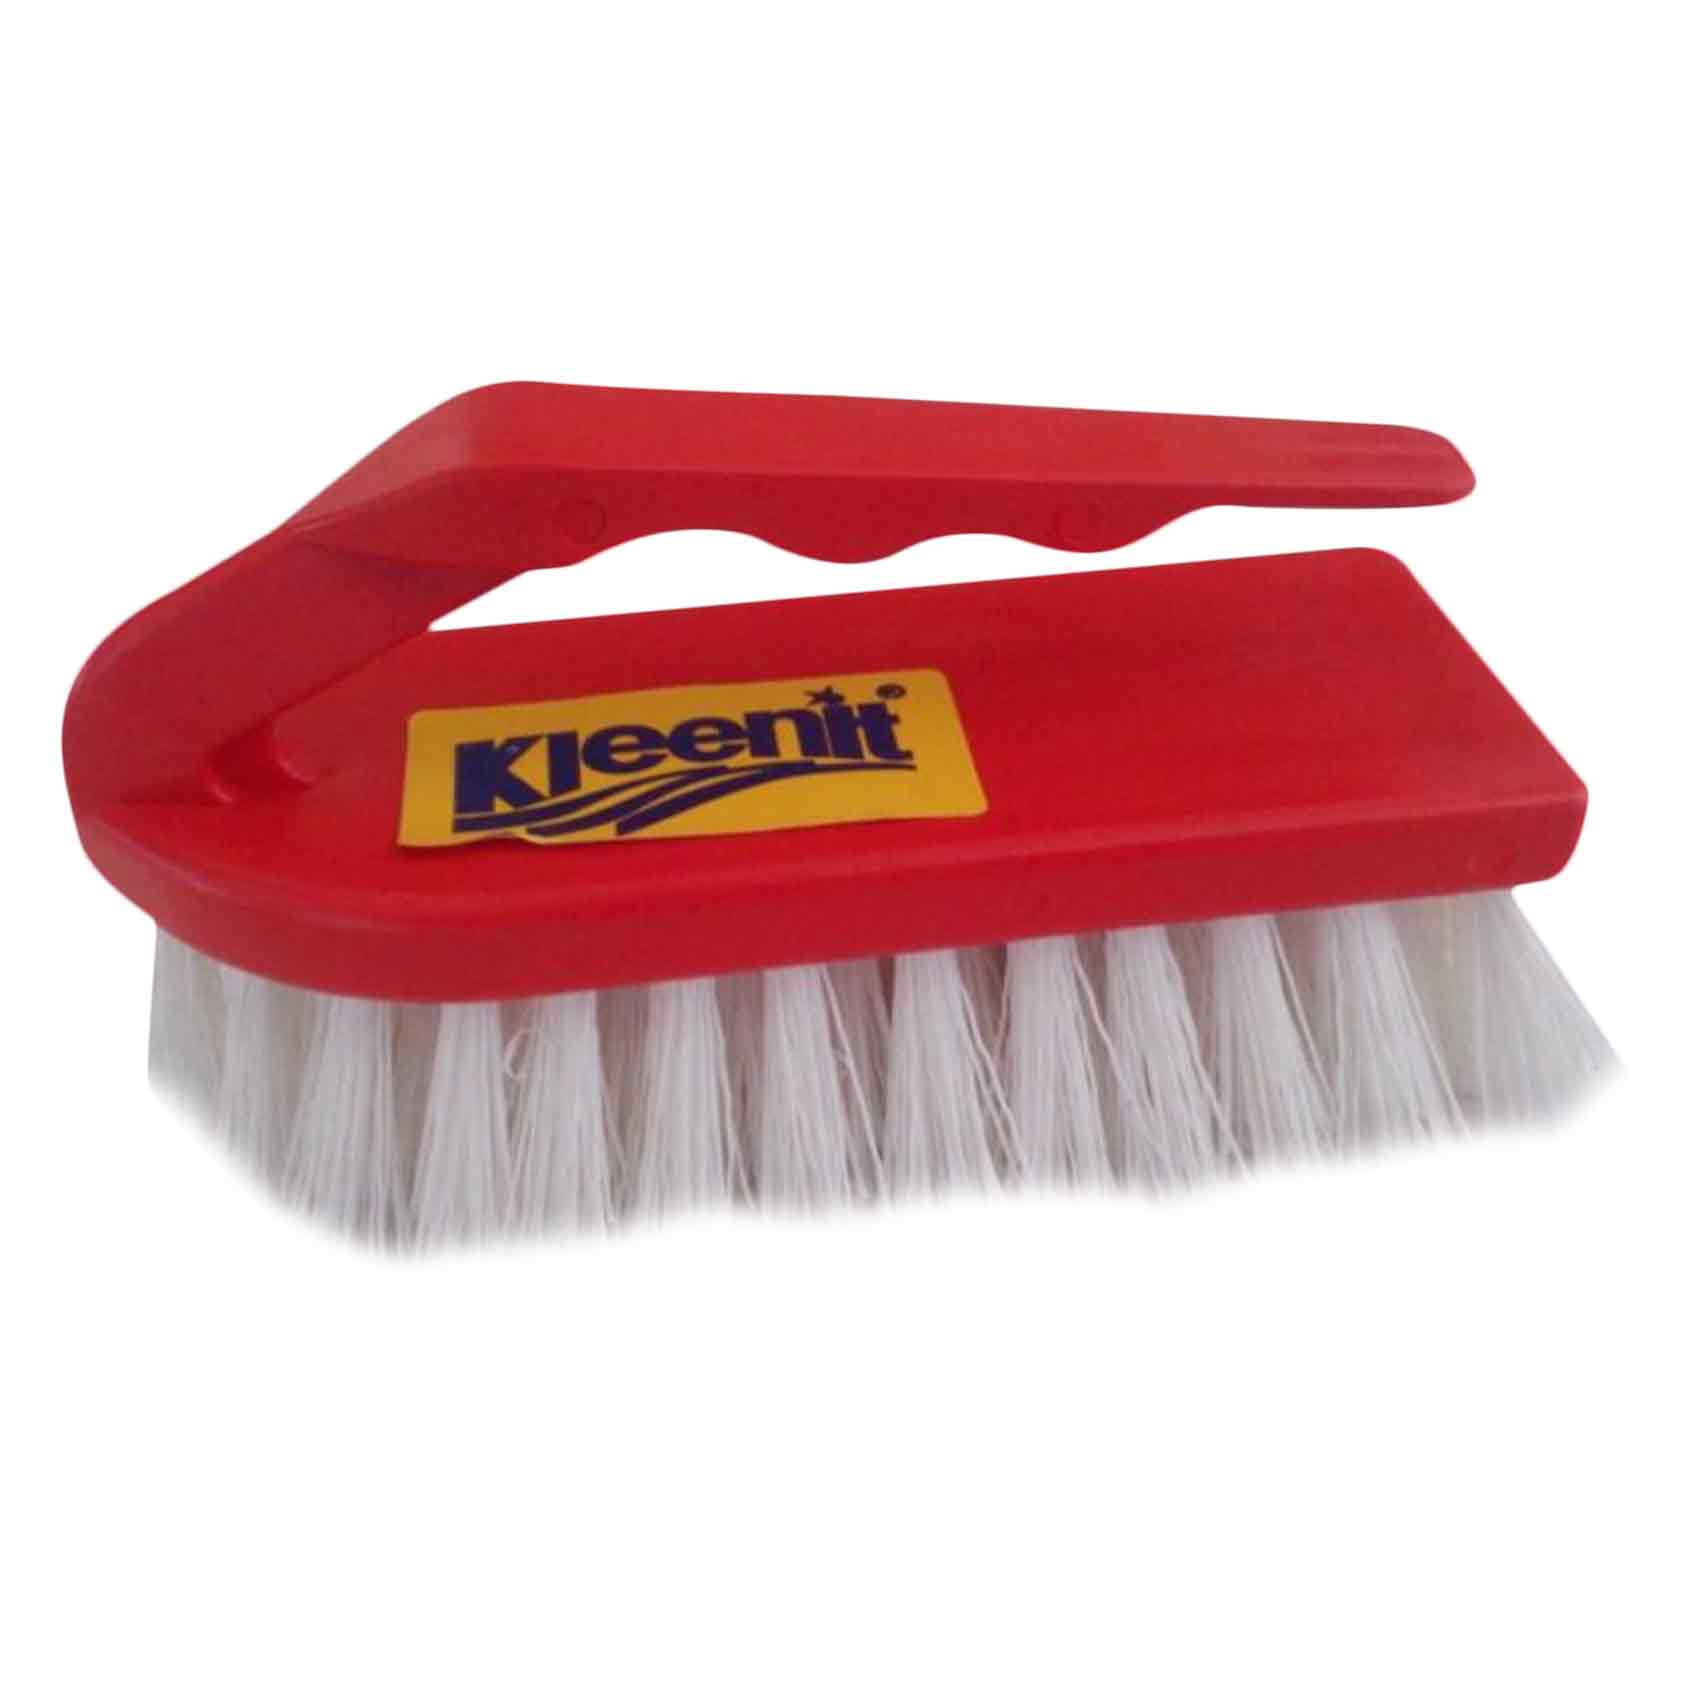 Kleenit Iron Scrubbing Brush